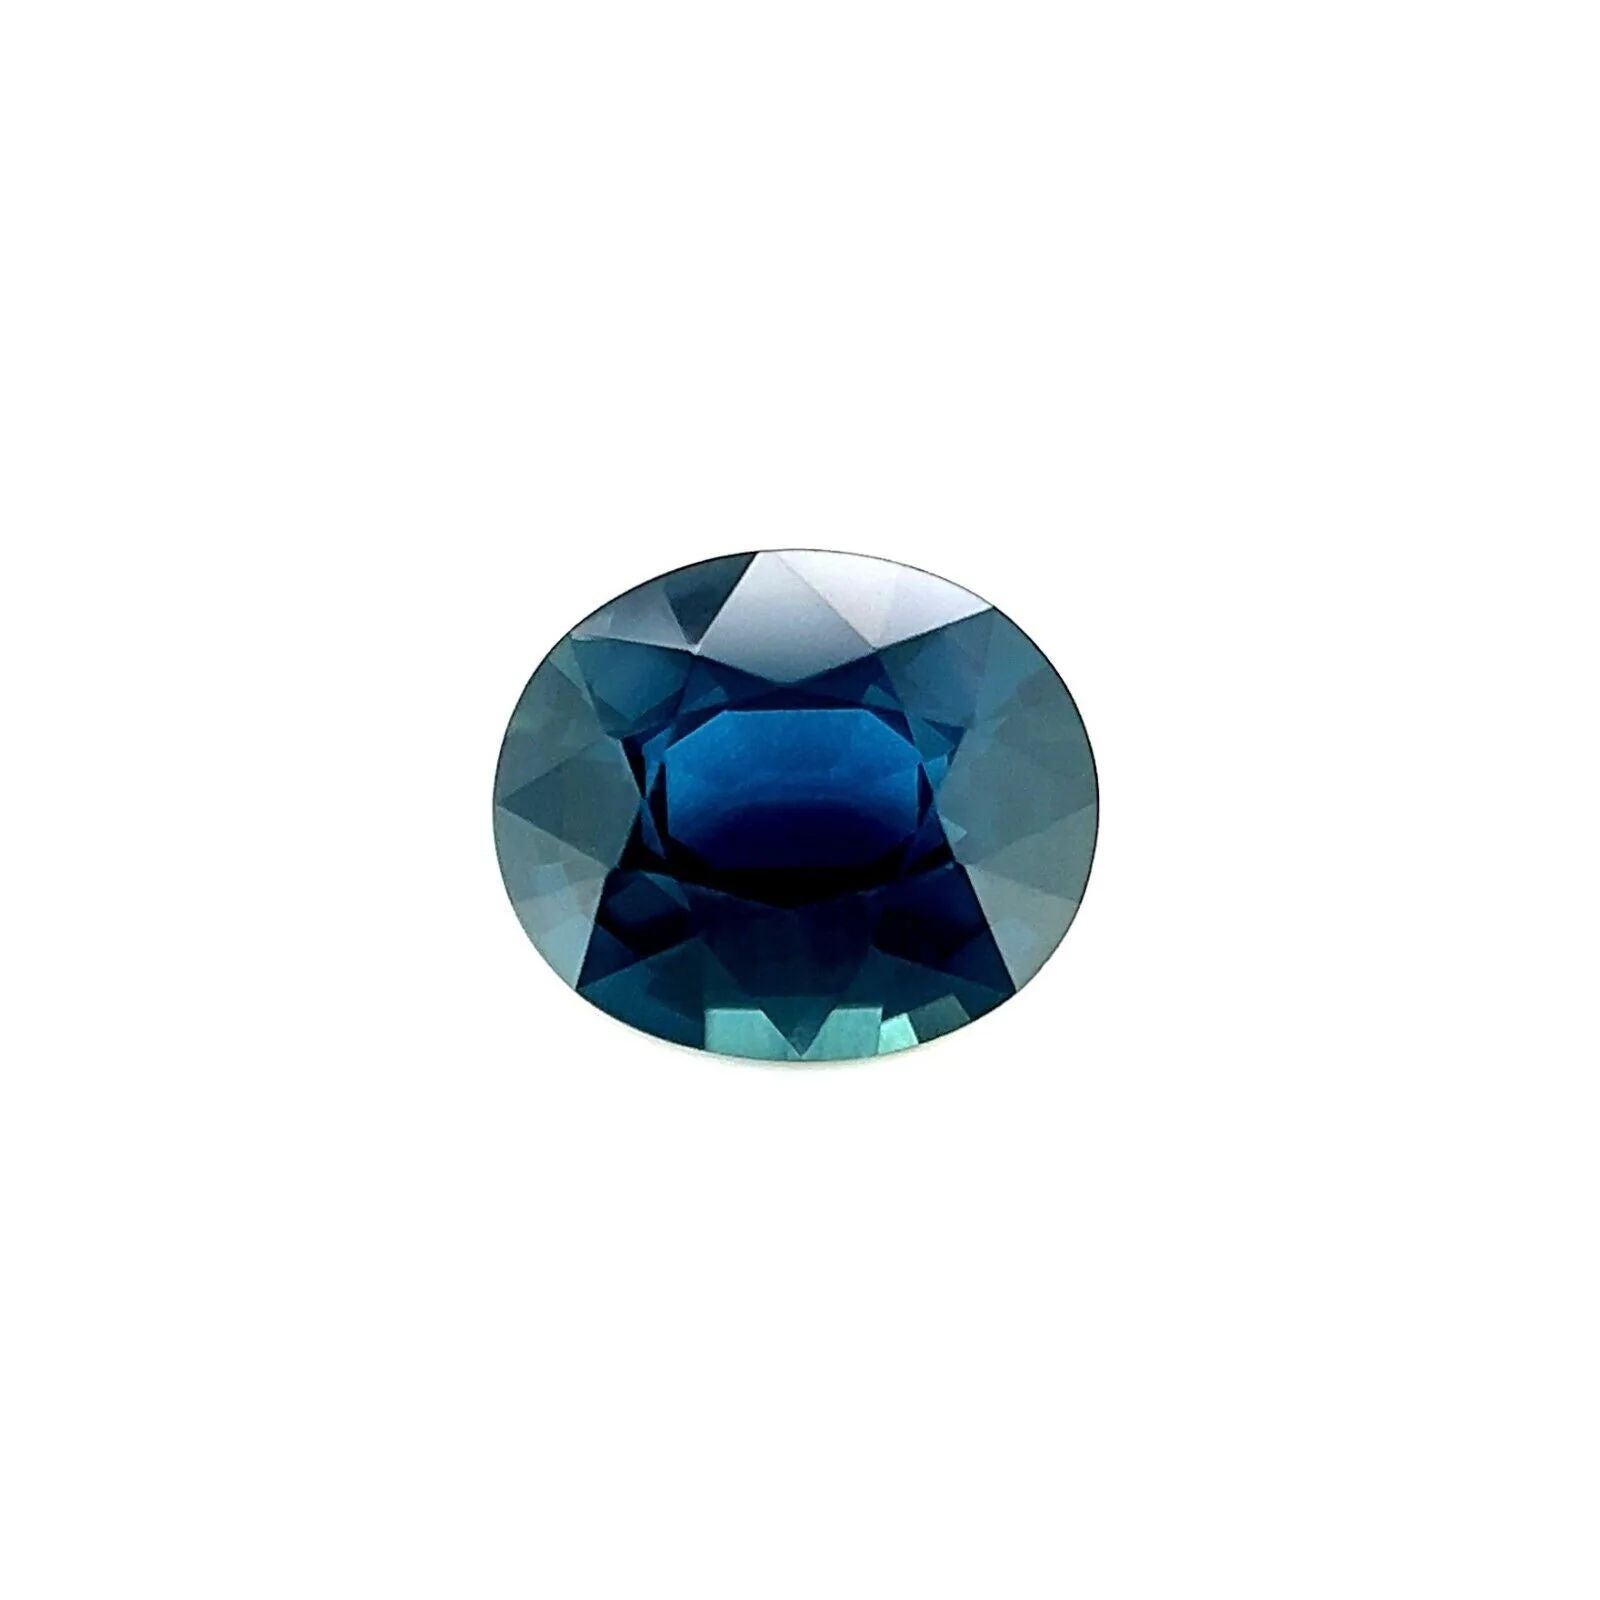 Nature Deep Blue Sapphire 1.45ct Oval Cut Loose Gemstone (Saphir bleu profond naturel, taille ovale)